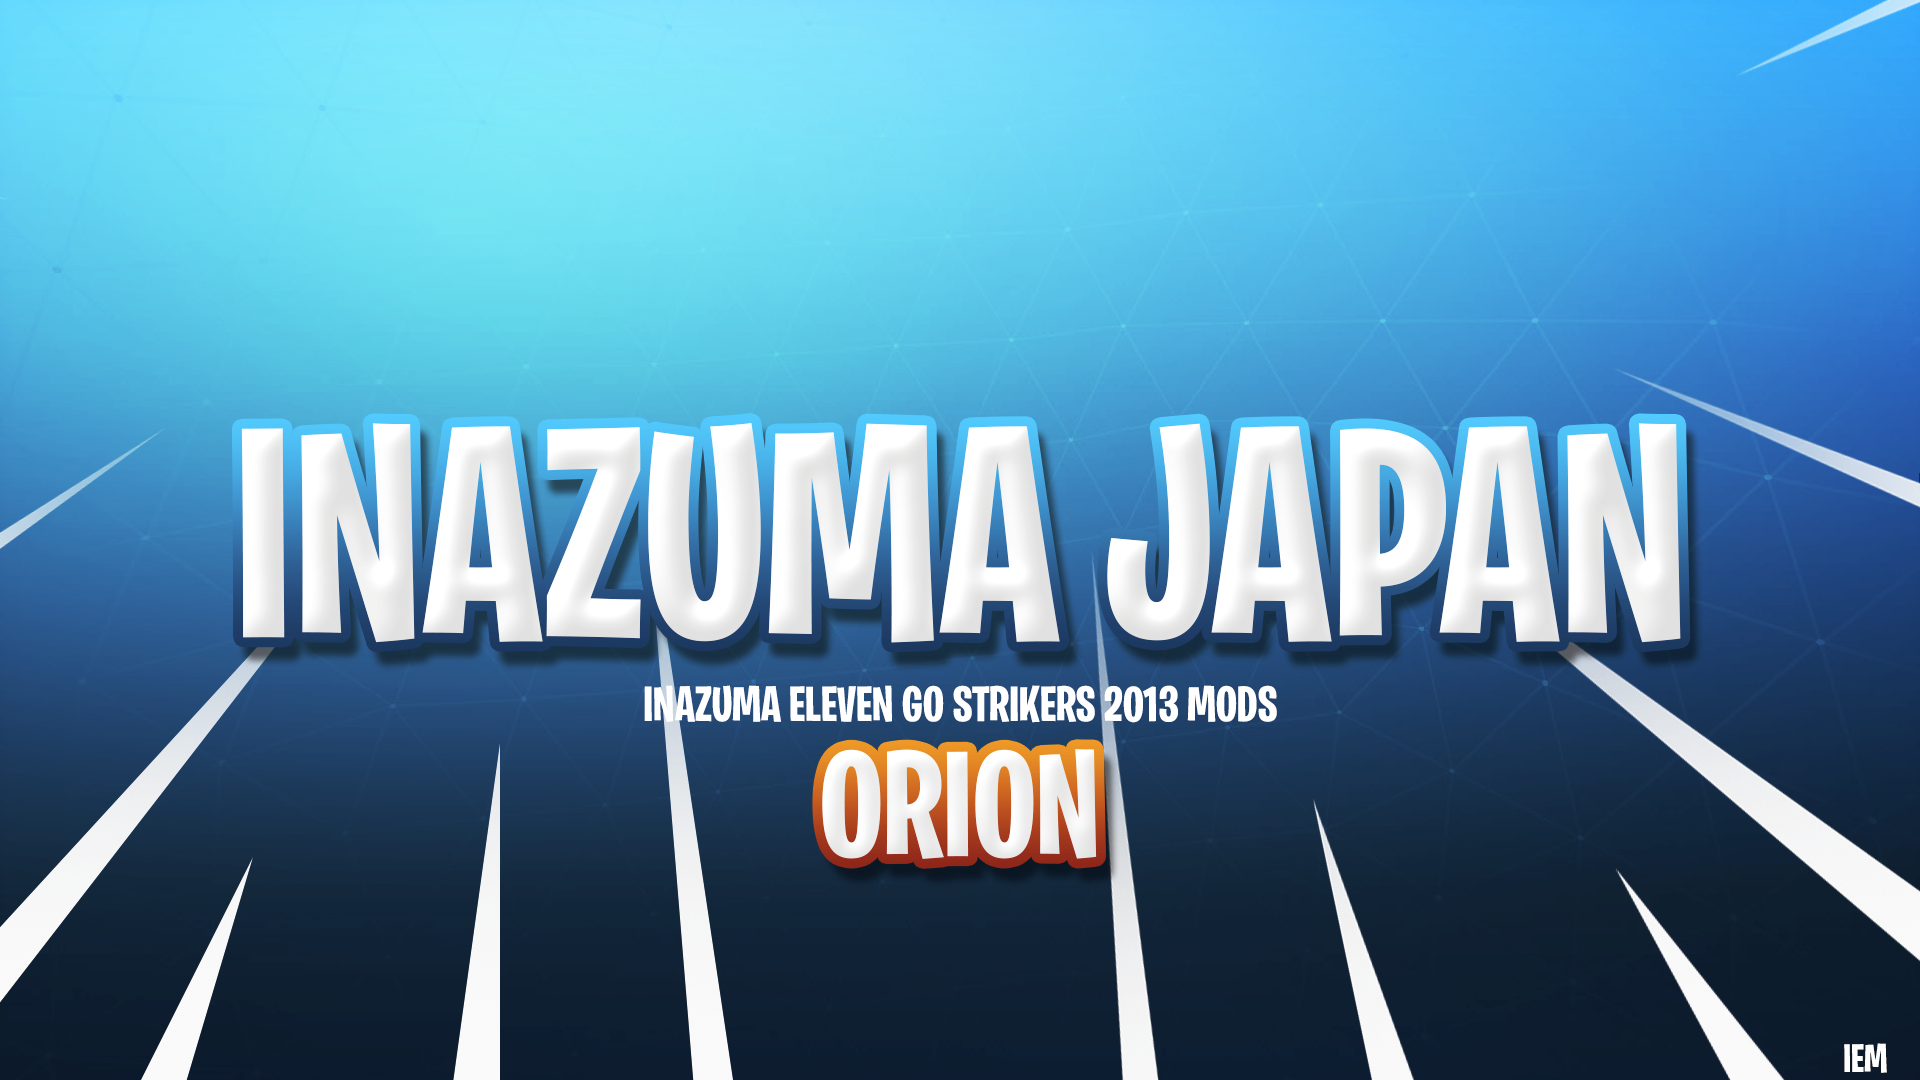 370-inazuma-japan-orion.png